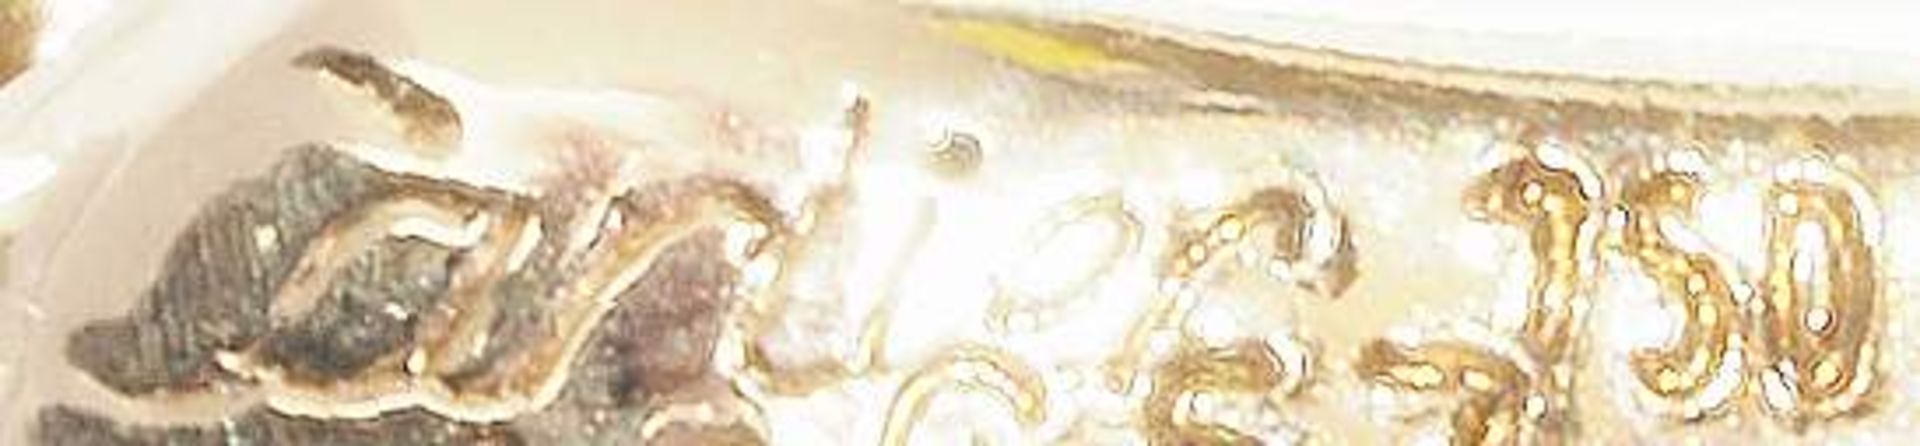 Vintage Brosche "Panther", CARTIER, signiert, Referenznummer 648653. 750er Gelbgold, schwarze Nase - Image 5 of 5